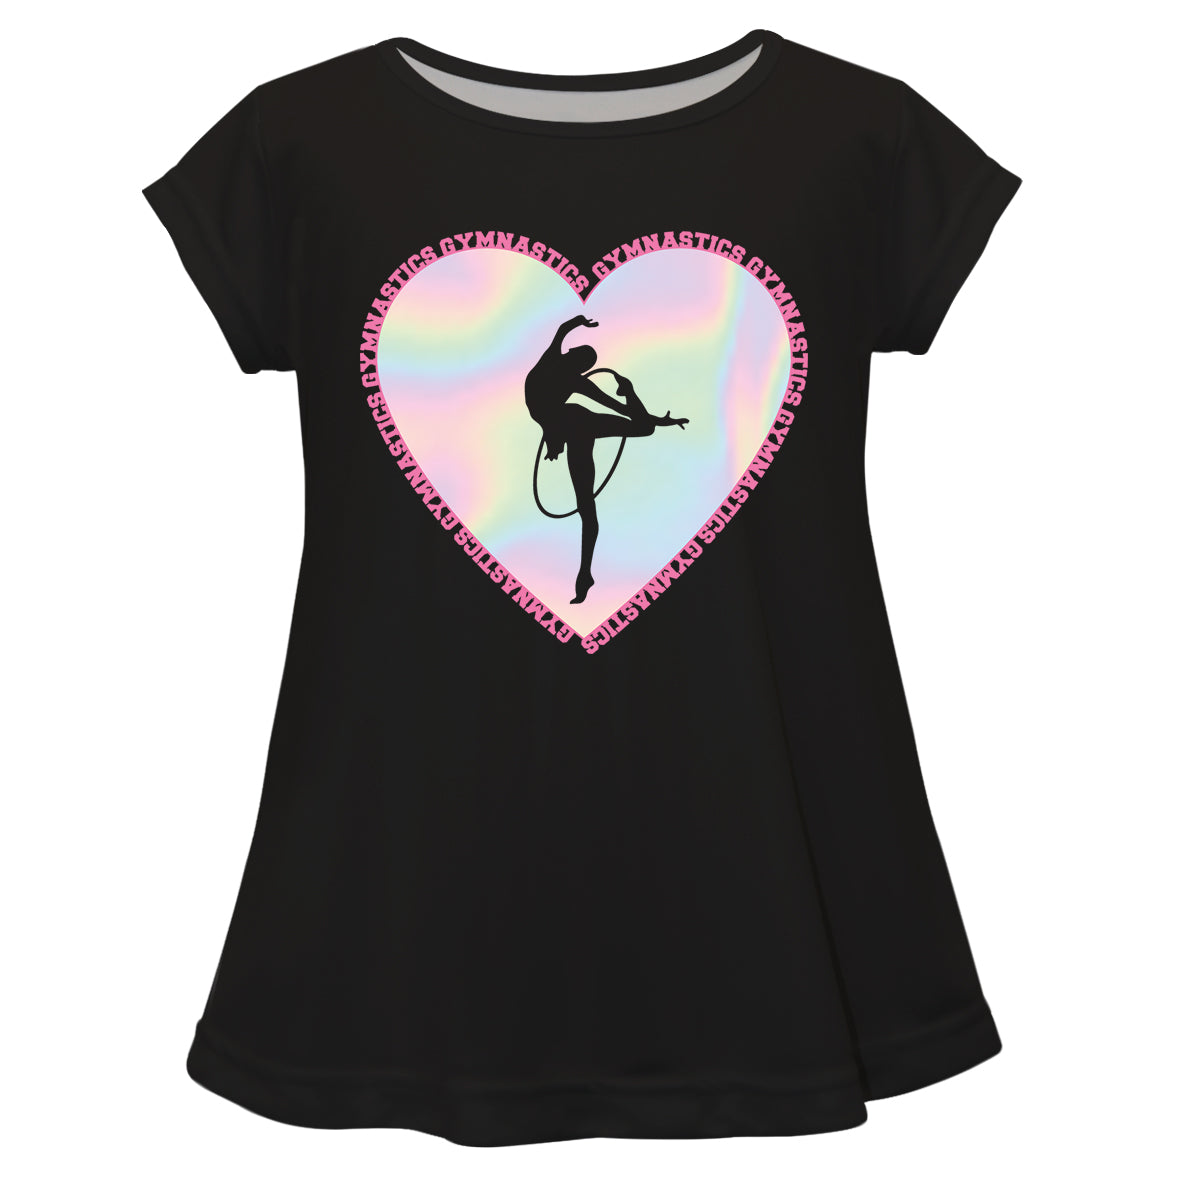 Gymnast Silhouette Black Short Sleeve Lauire Top - Wimziy&Co.